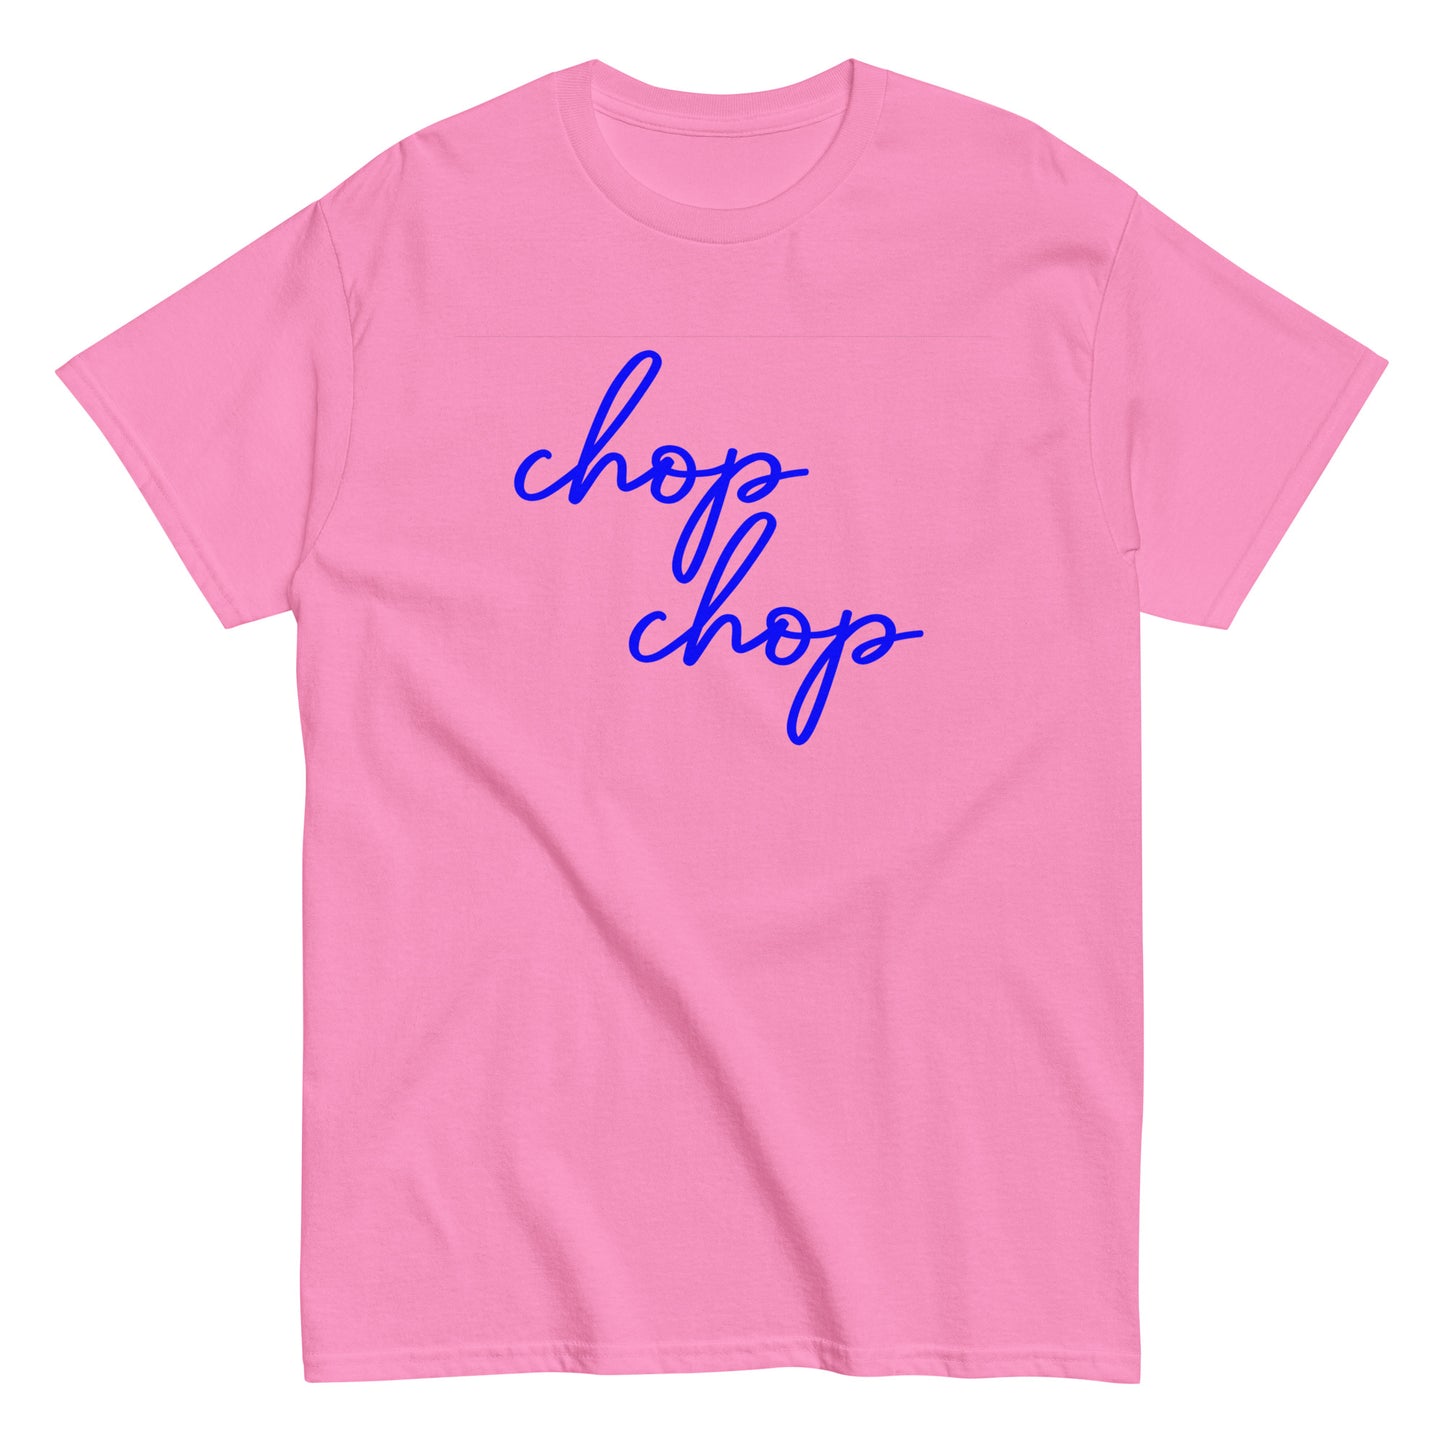 Chop Chop Tee 02